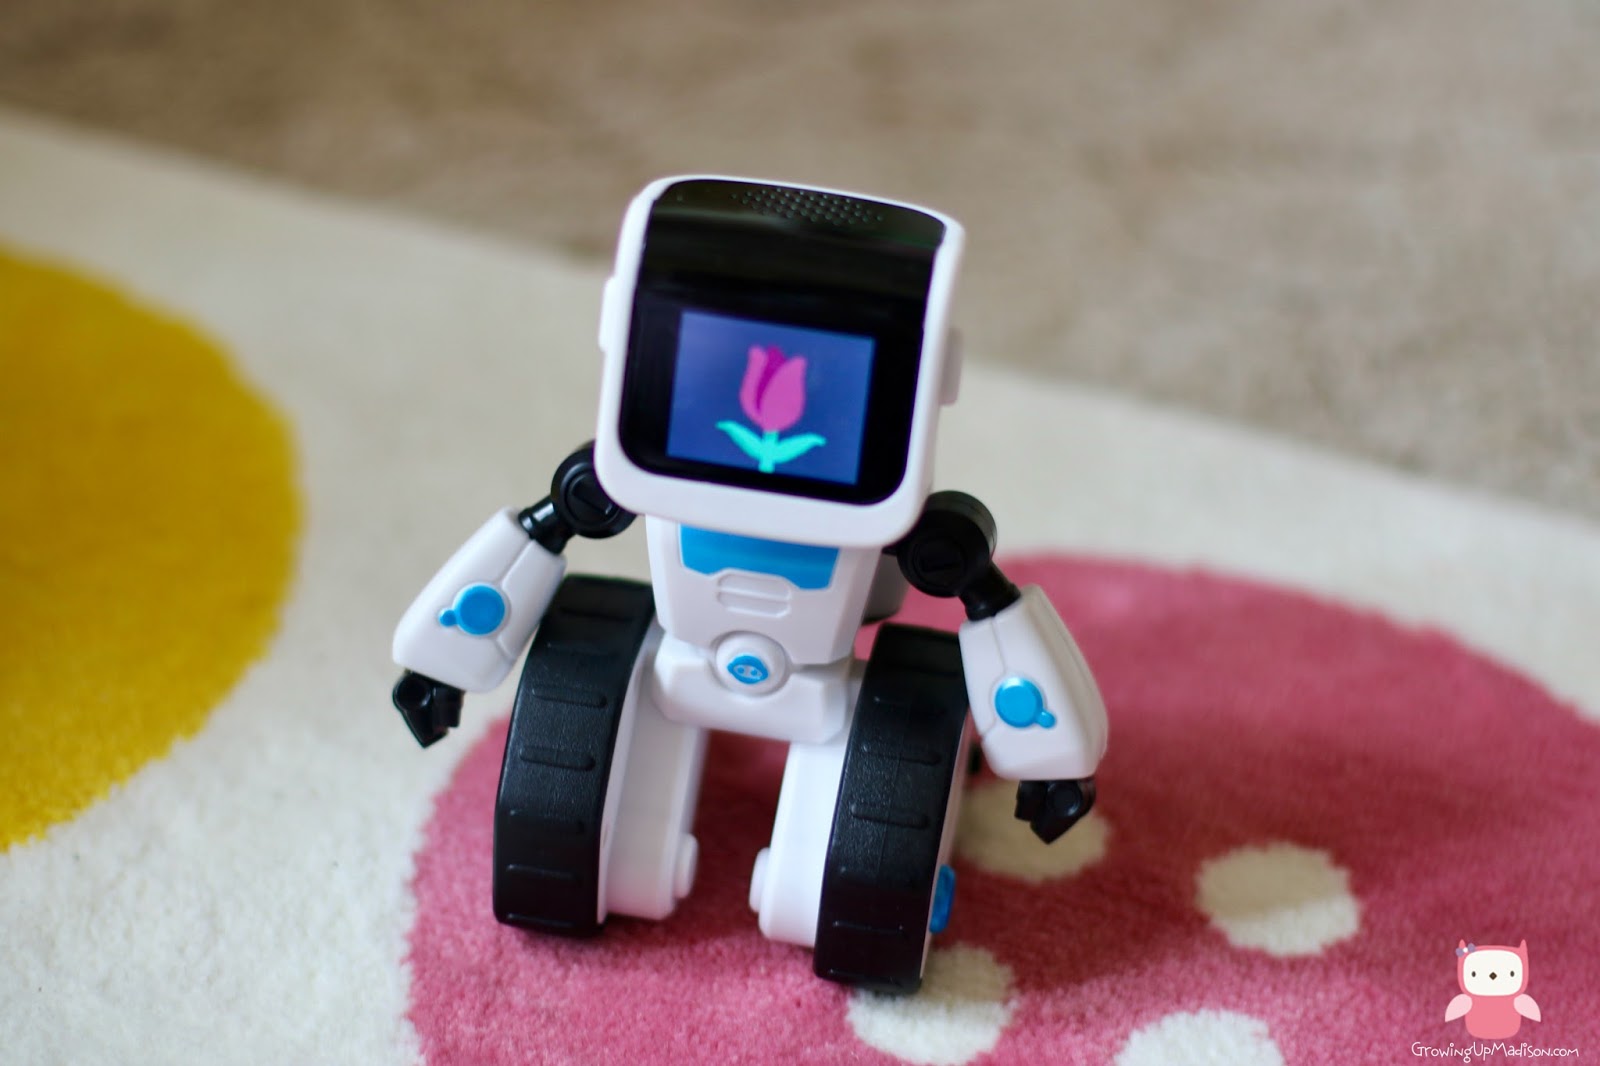 Coji the Emoji Coding Robot - Review, Tech Age Kids